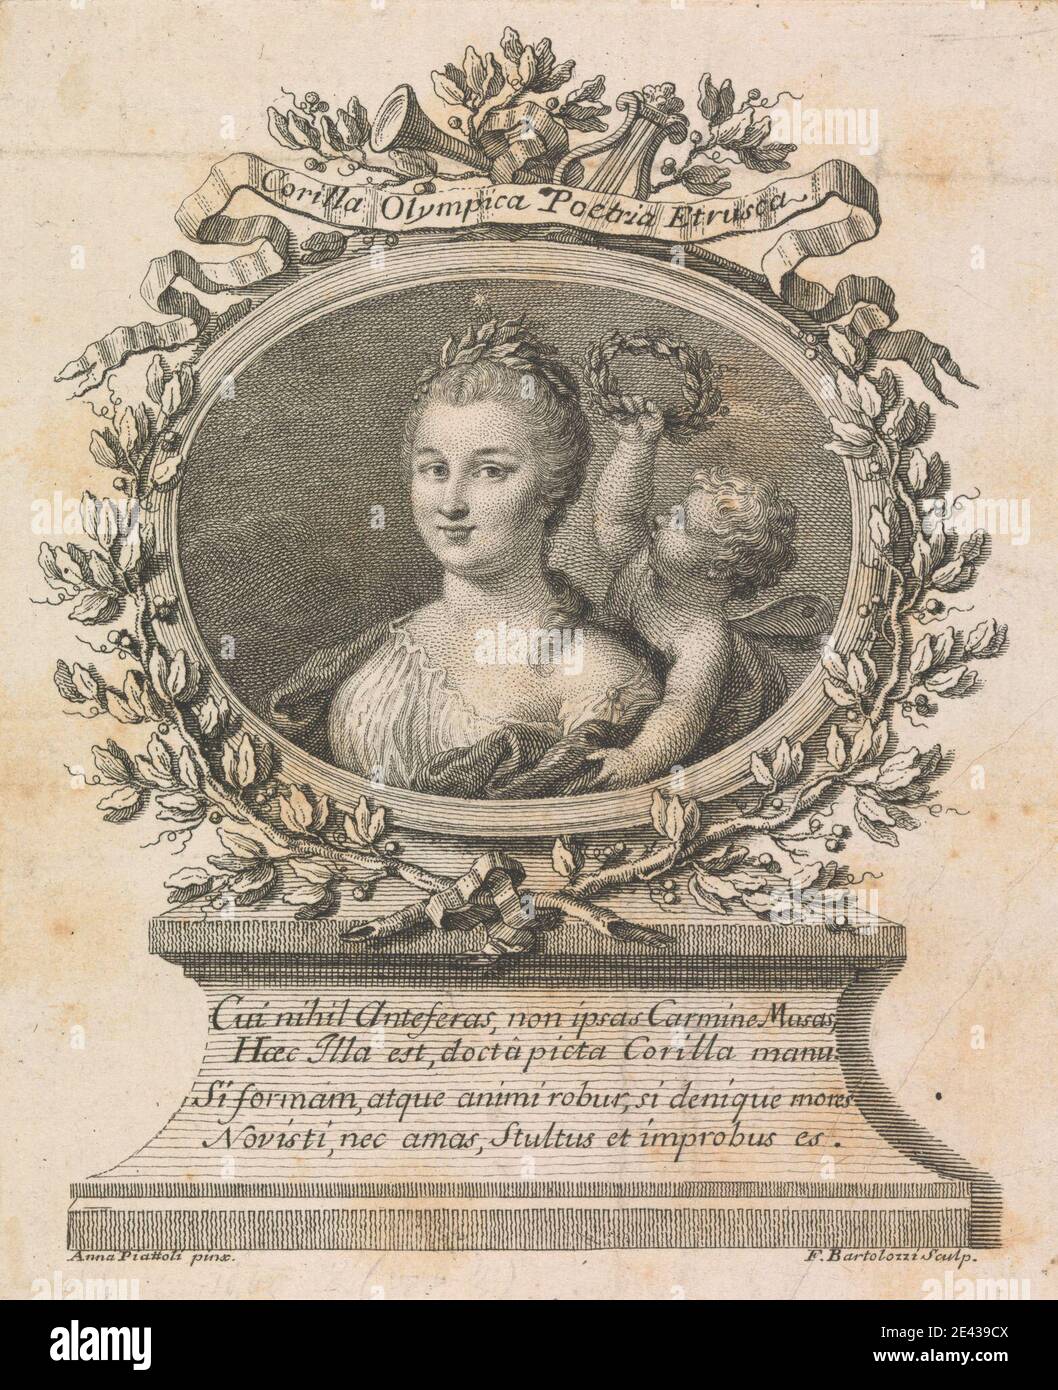 Francesco Bartolozzi RA, 1728â€“1815, Italian, active in Britain (1764â€“99), Corilla Olympica Poetria Etrusca. Engraving. Stock Photo